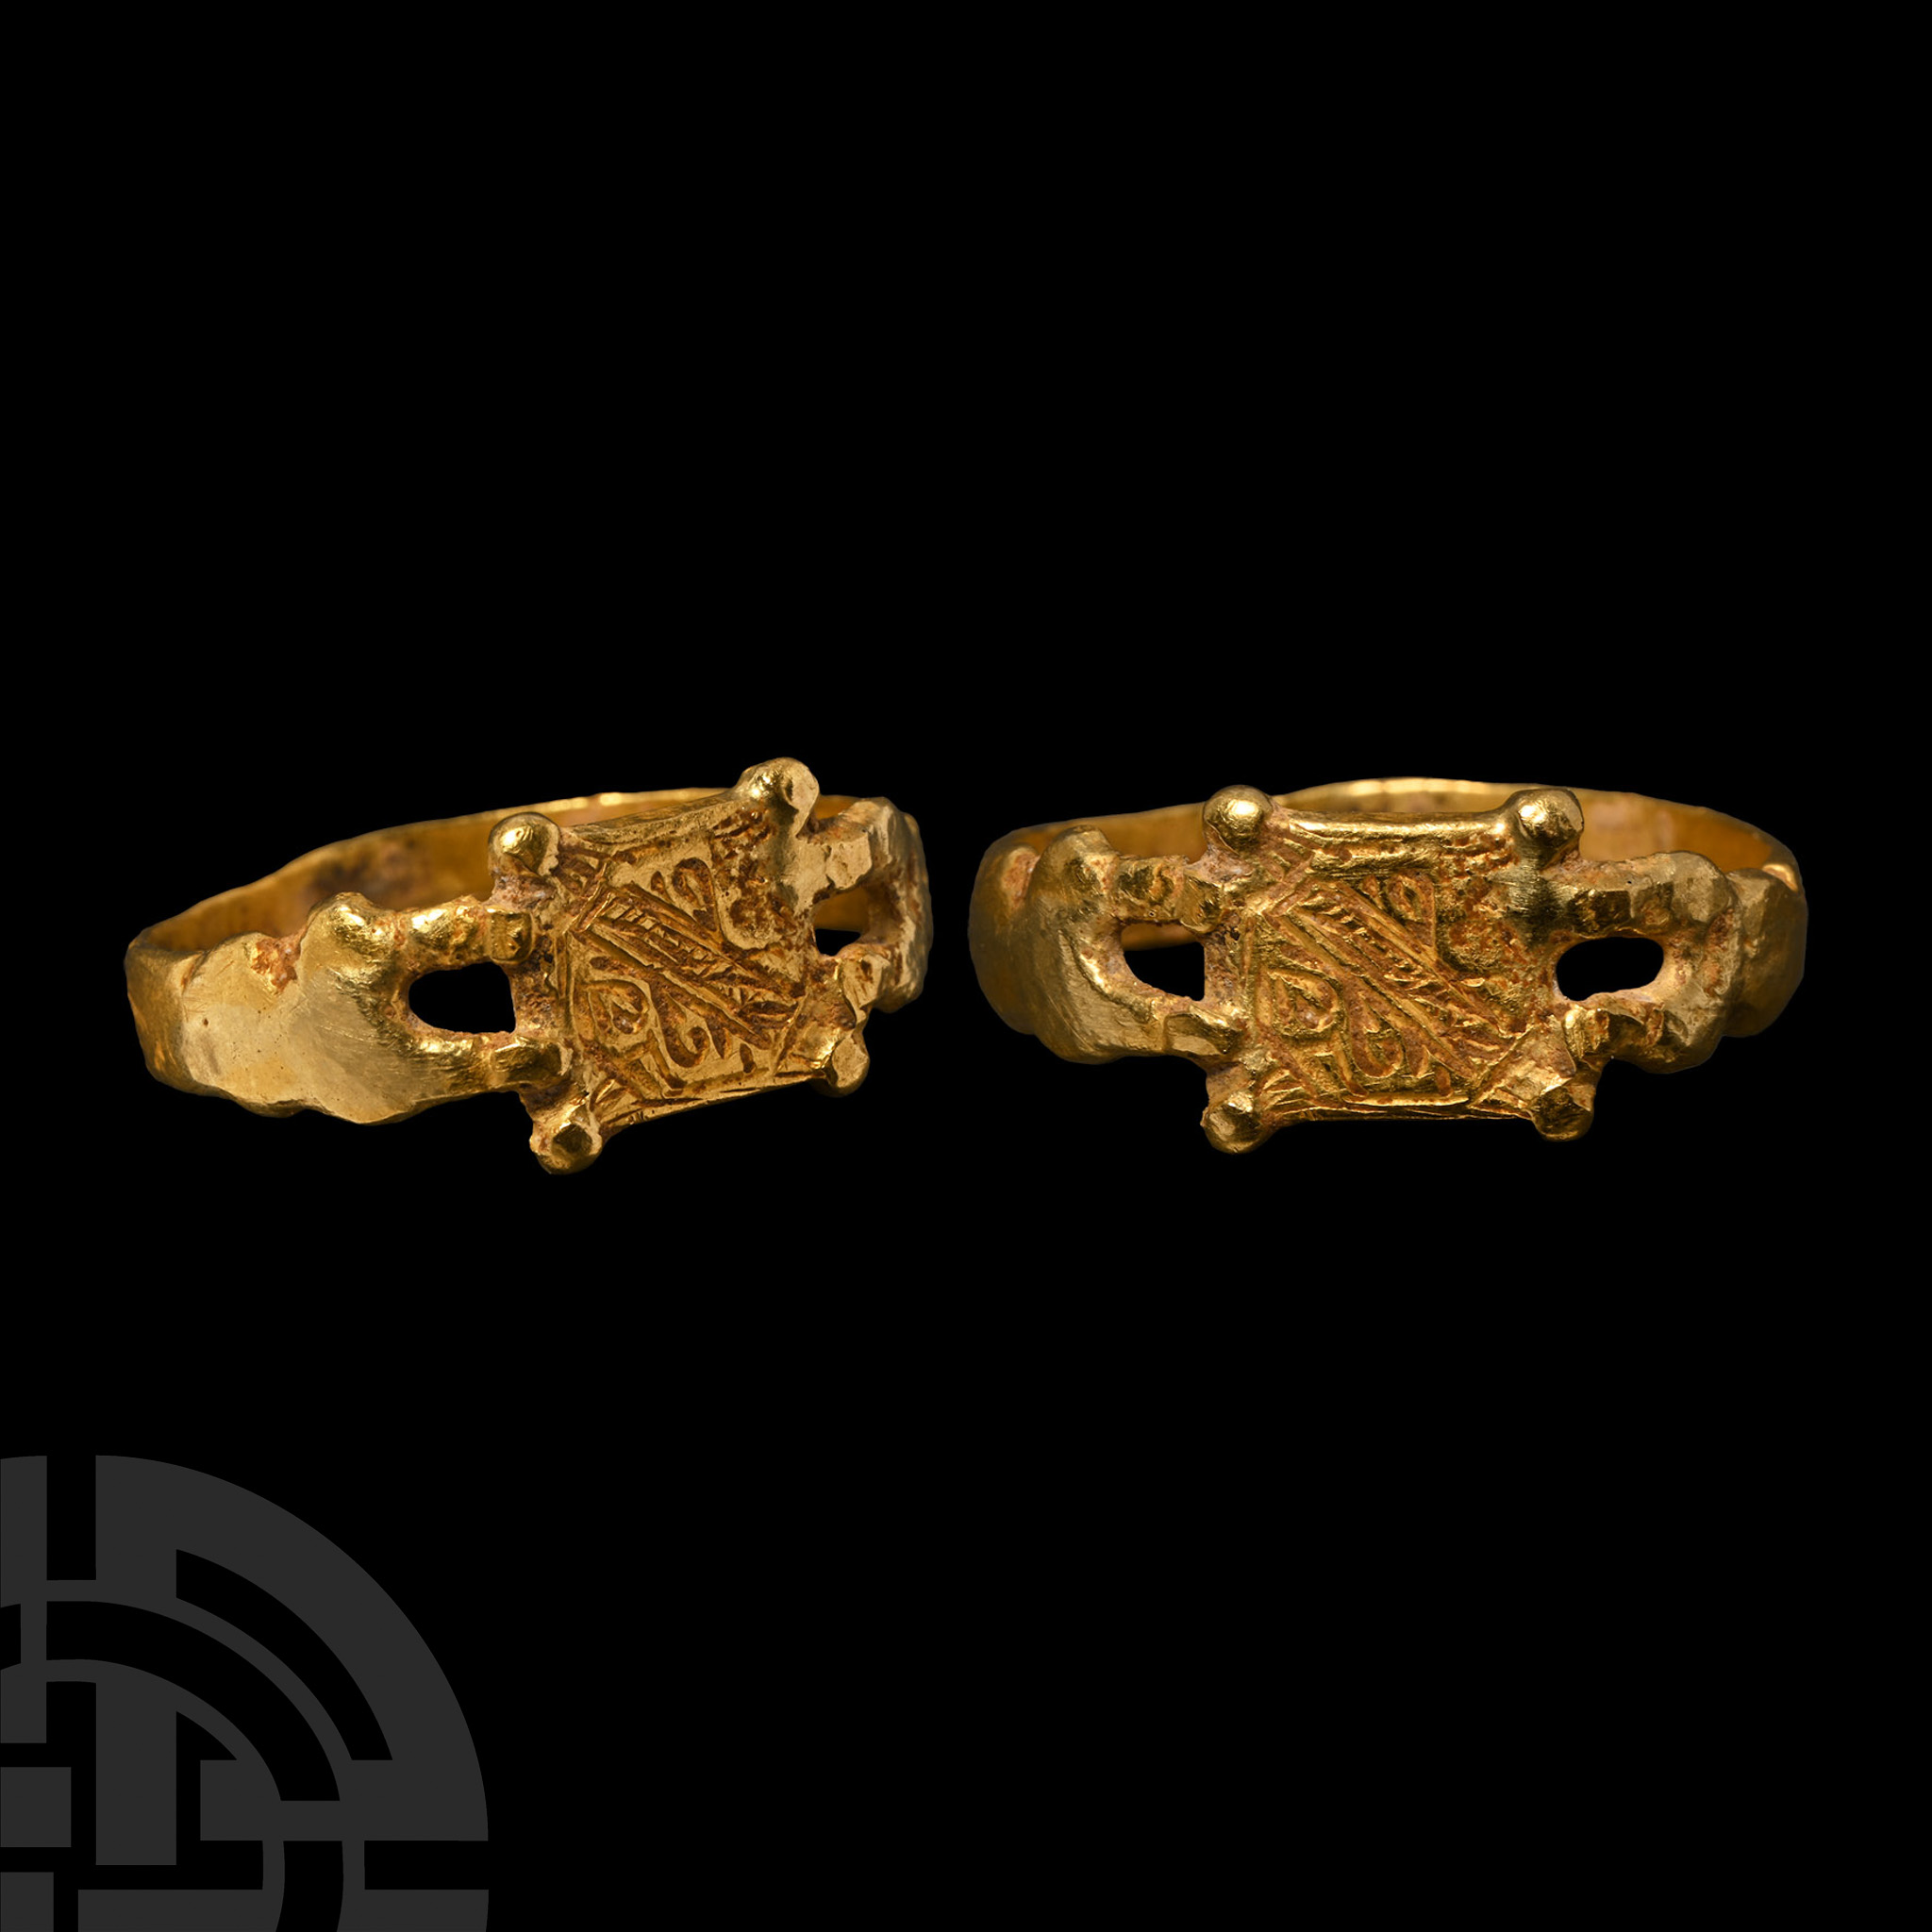 Byzantine Gold Ring with Foliate Motifs